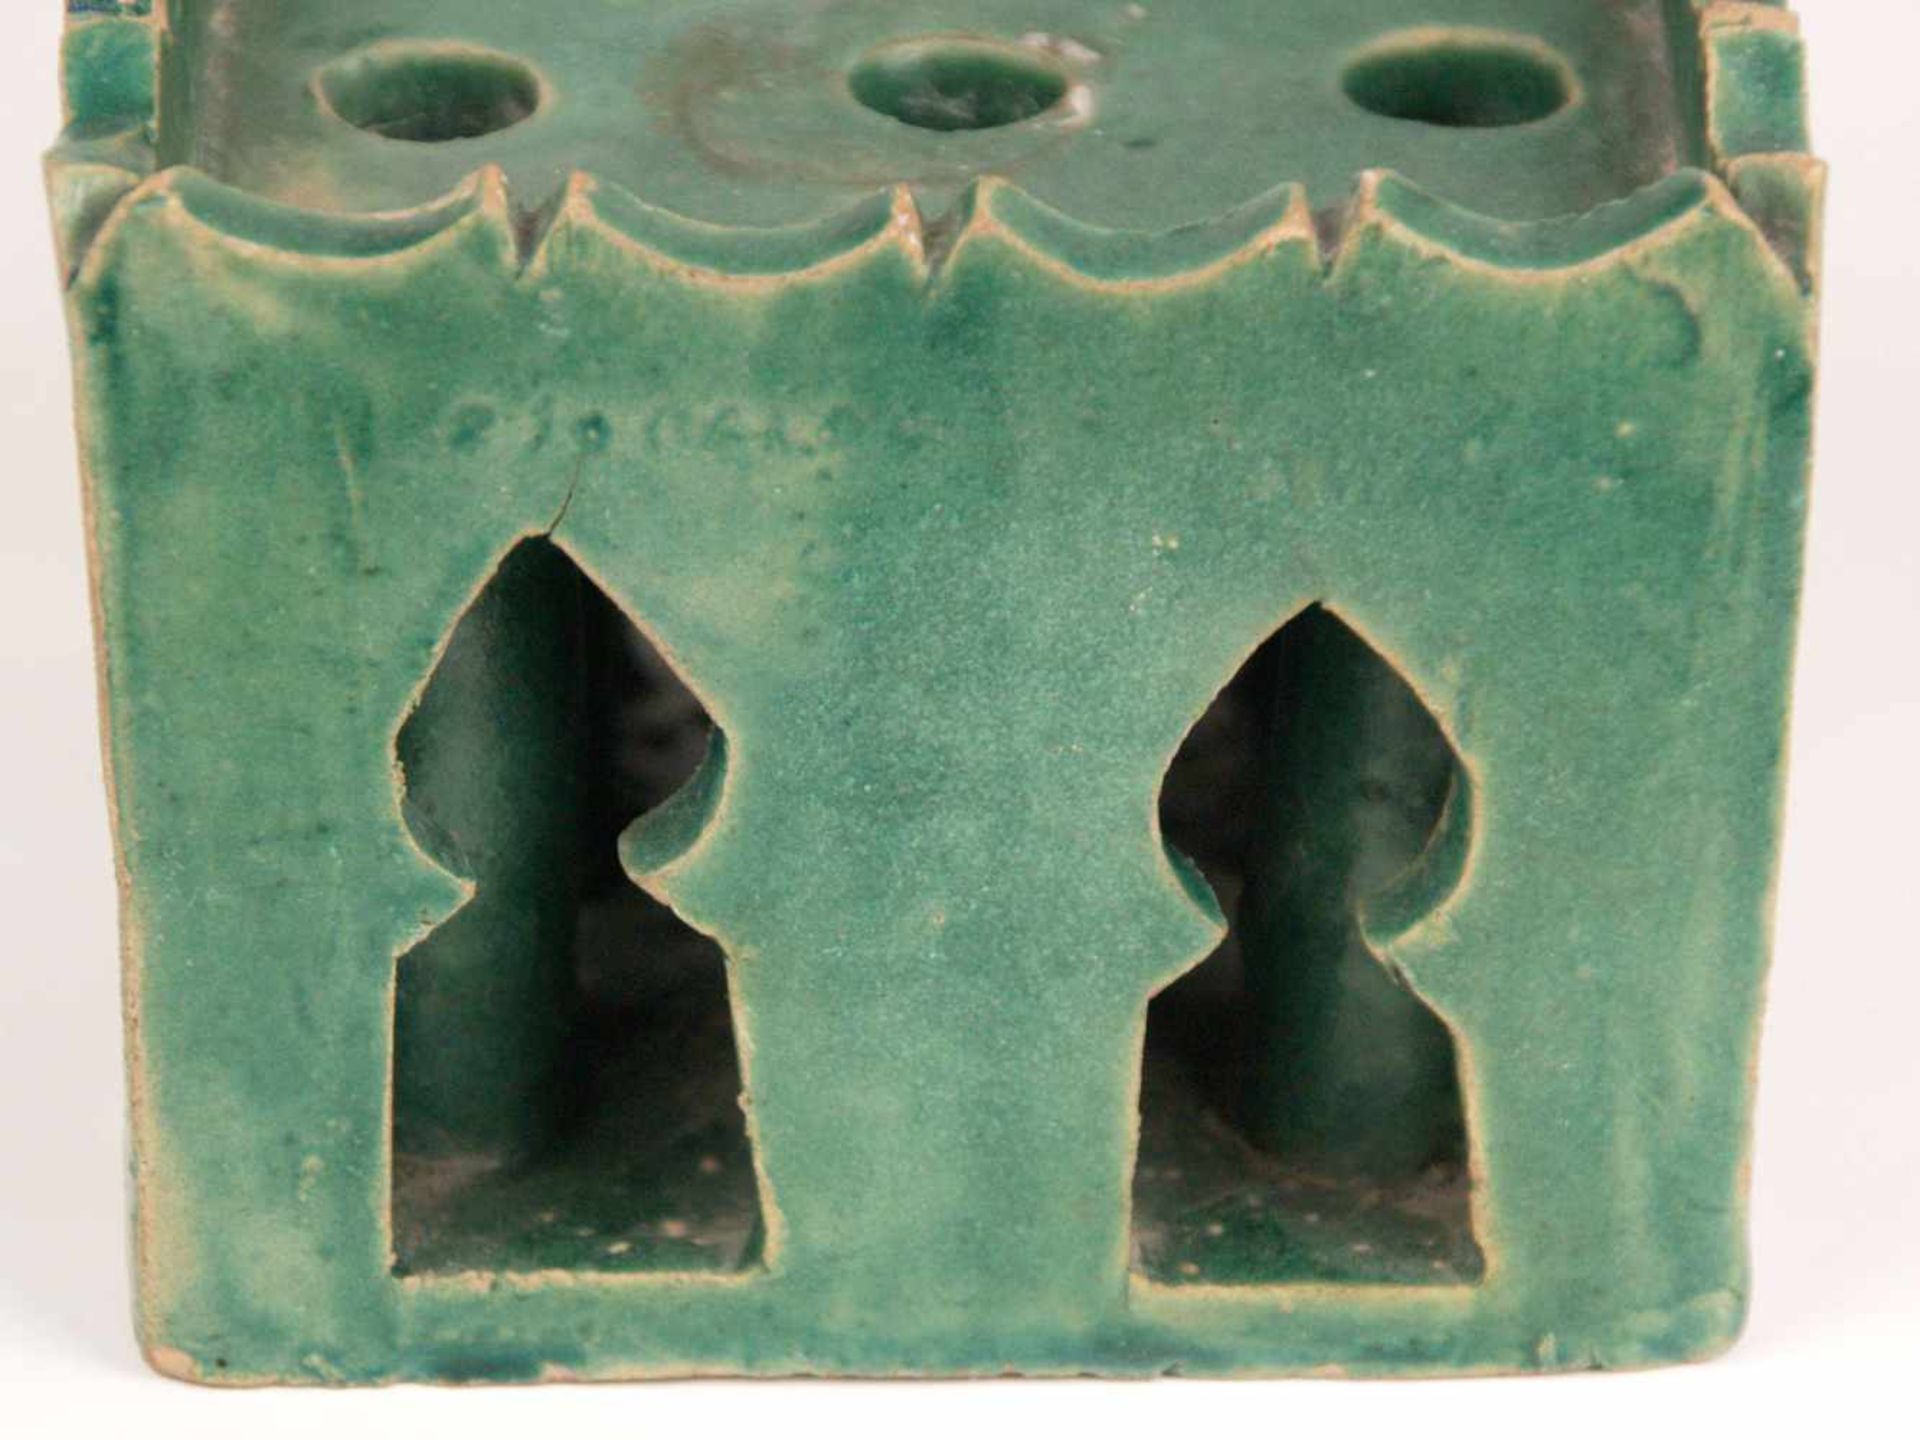 Steckvase - Marokko, Berber-Keramik, grüner Scherben, rechteckiger Korpus, Wandung durchbrochen - Bild 5 aus 7